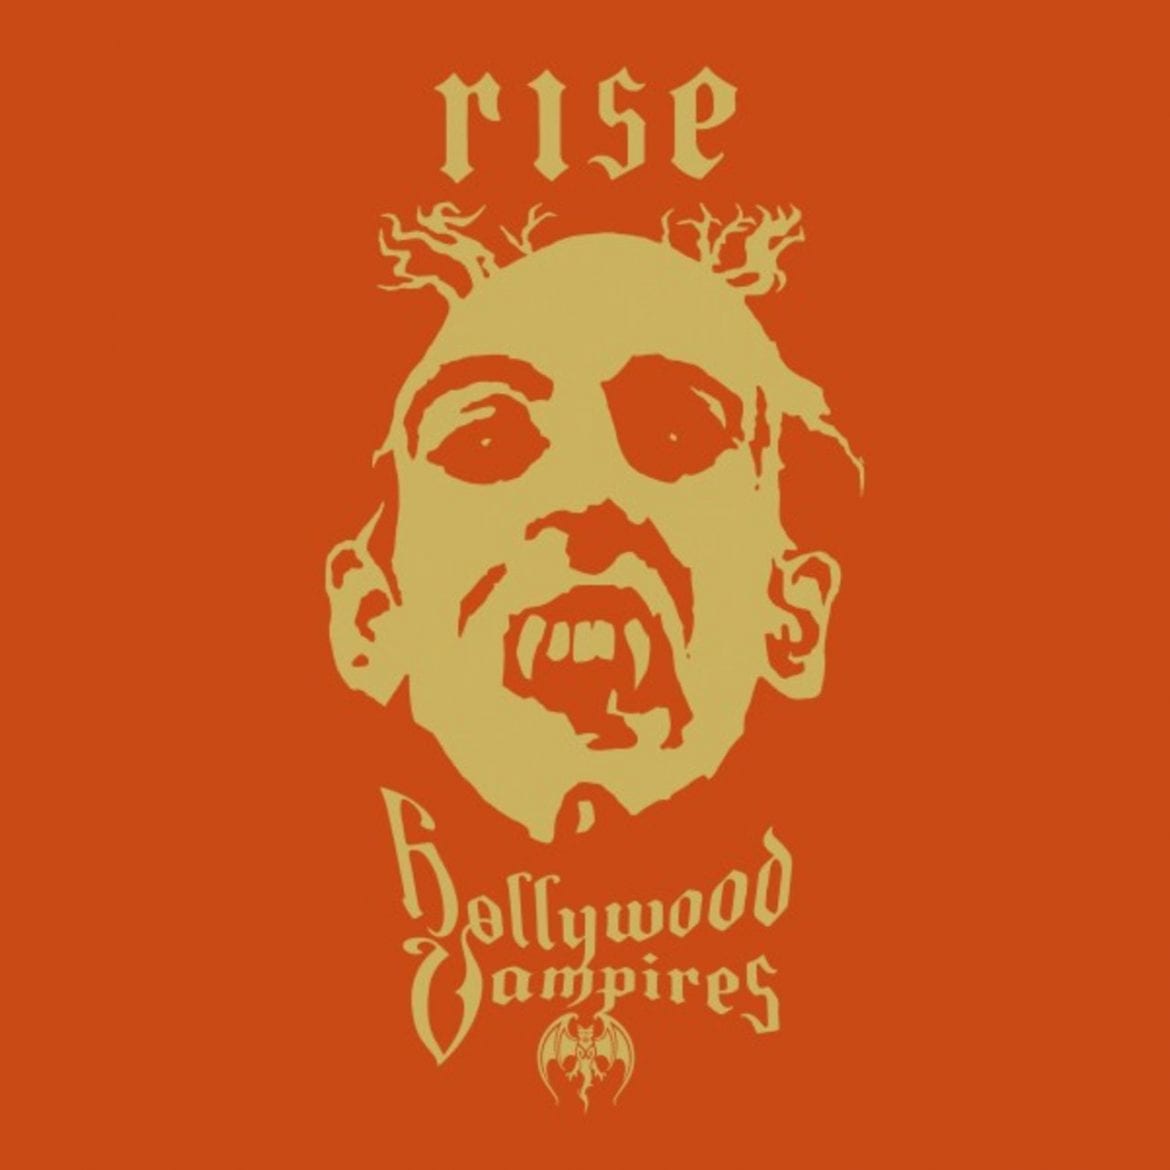 Hollywood Vampires – „Rise” (recenzja)